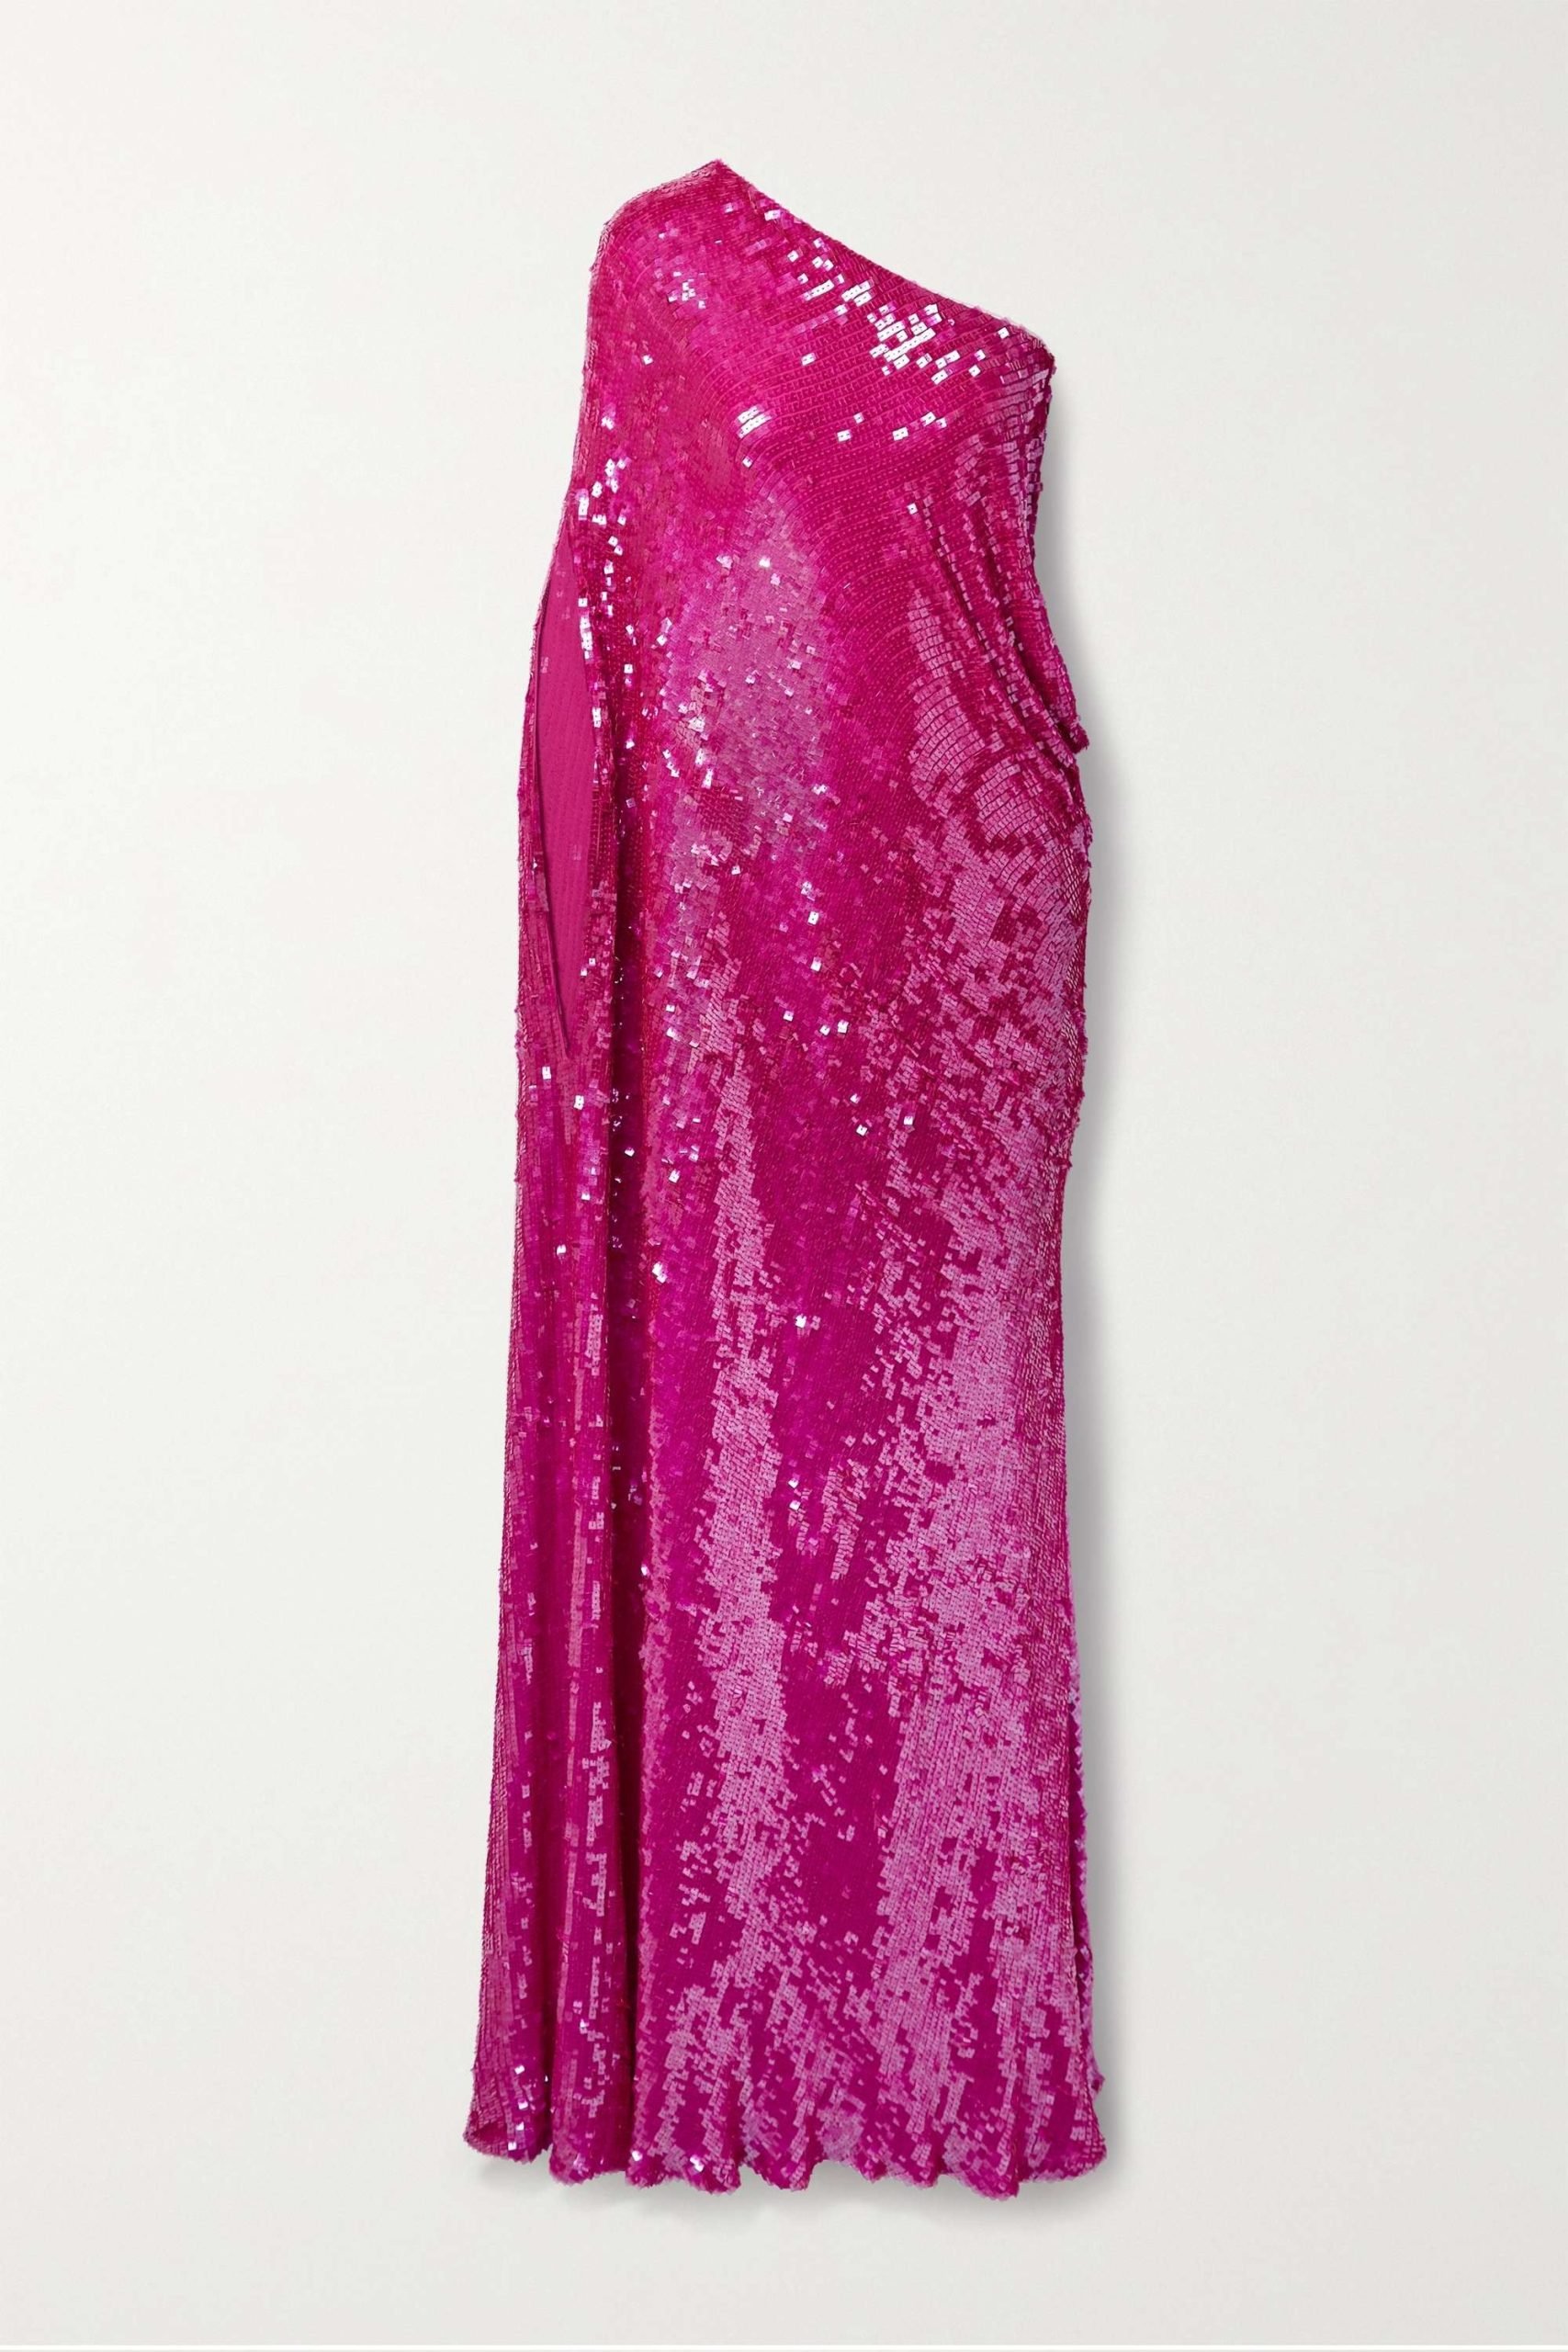 Ashish One-Shoulder Sequined Georgette Gown in Magneta.jpg